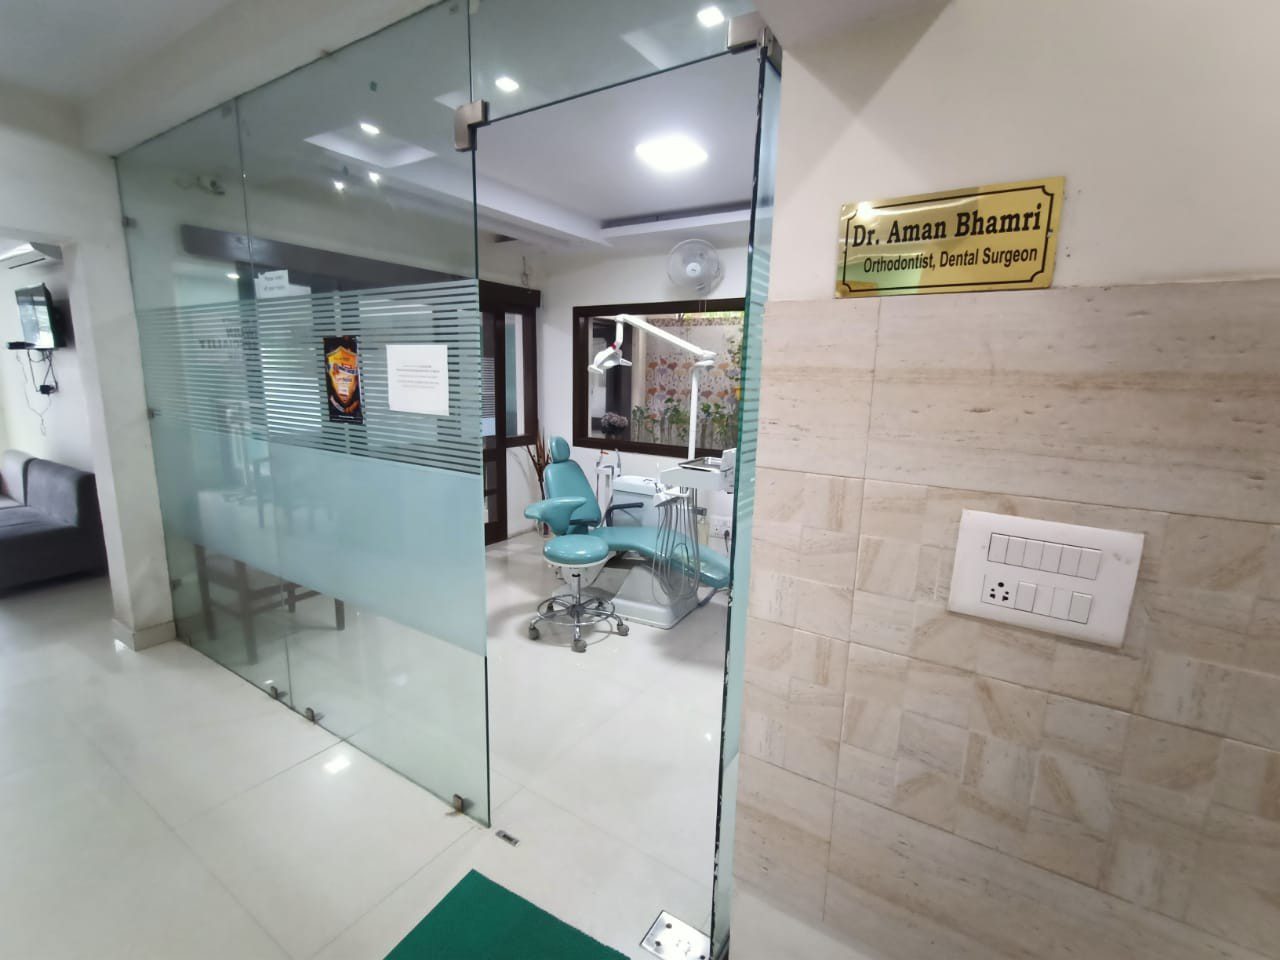 Dr. Aman Bhamri Orthodontist Office